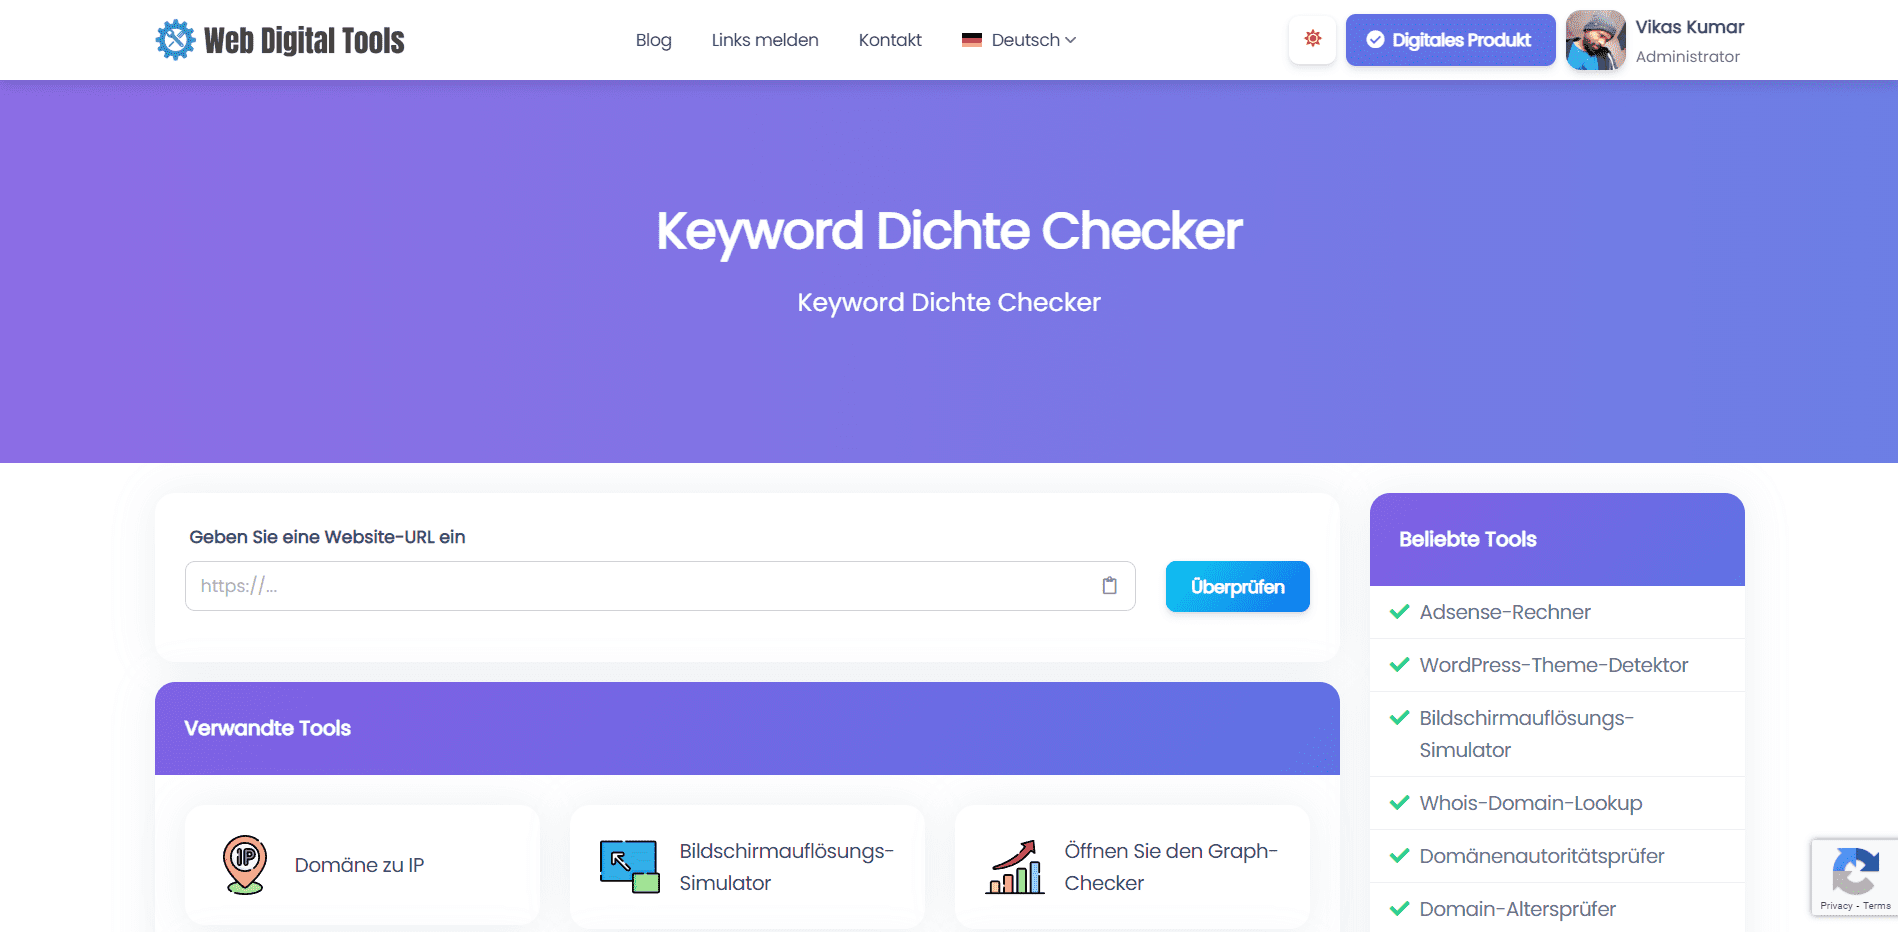 Keyword Dichte Checker